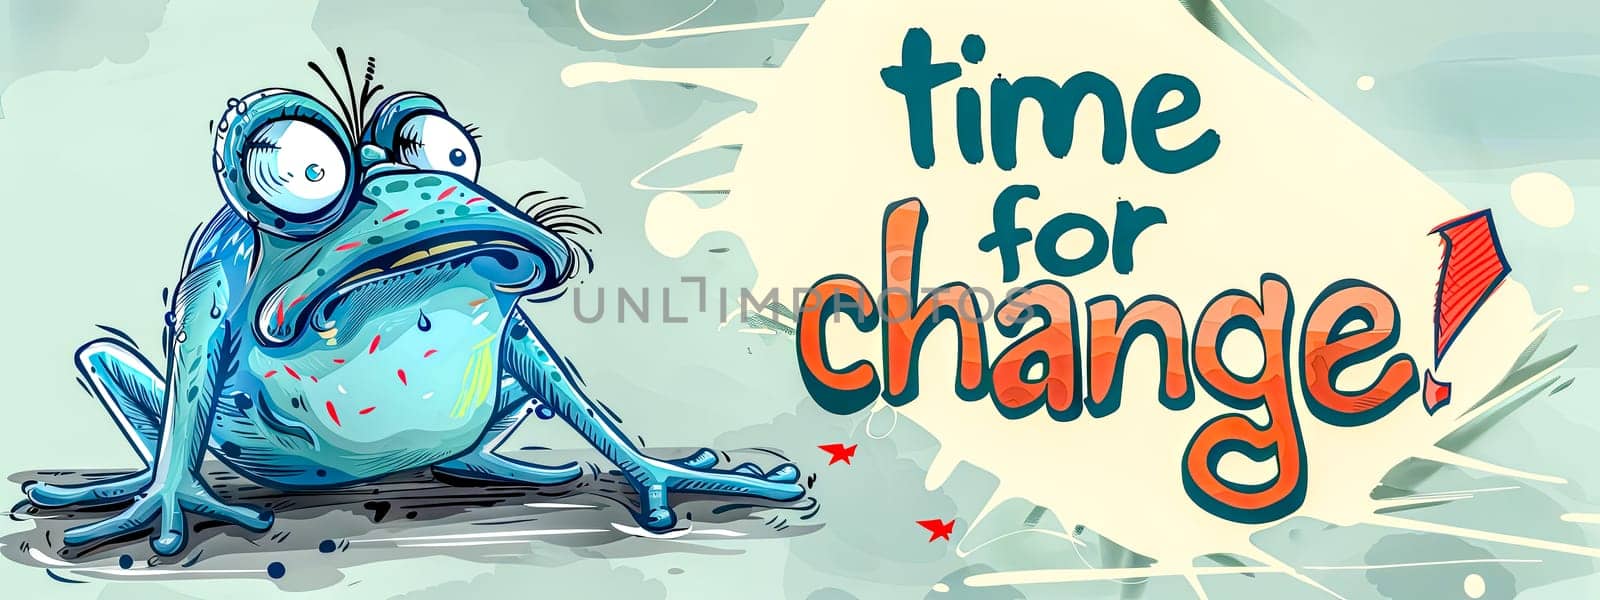 Colorful illustration of an expressive frog beside a motivational message on change